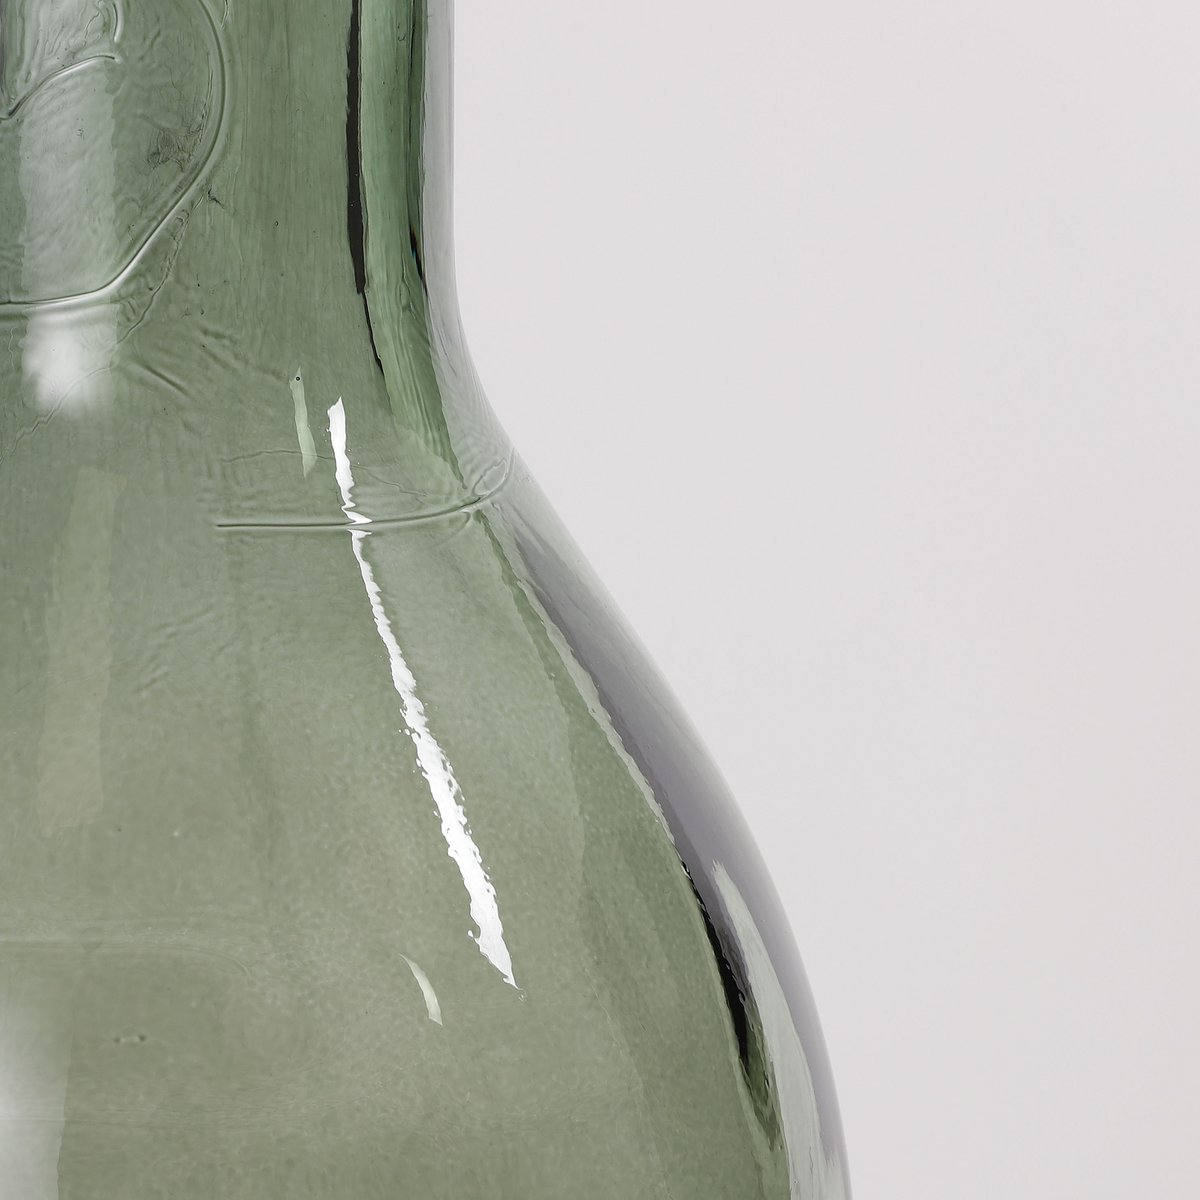 Rioja Flaschenvase - H50 x Ø15 cm - Recyceltes Glas - Grün